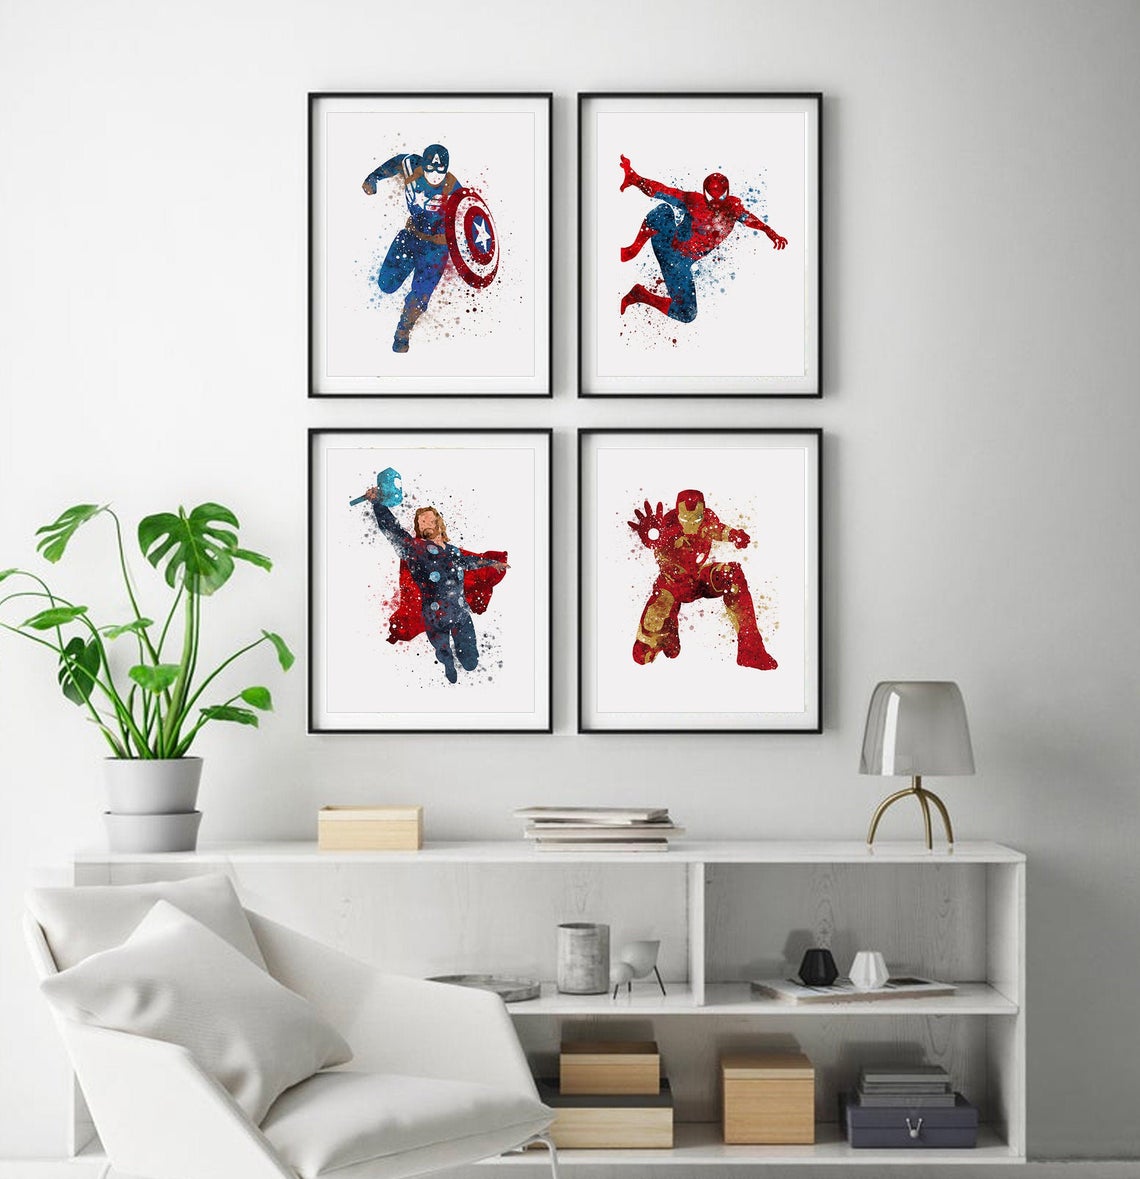 BROE5373 Tranh Anime Siêu Anh Hùng Avengers Marvel Captain America Spiderman Thor Iron Man